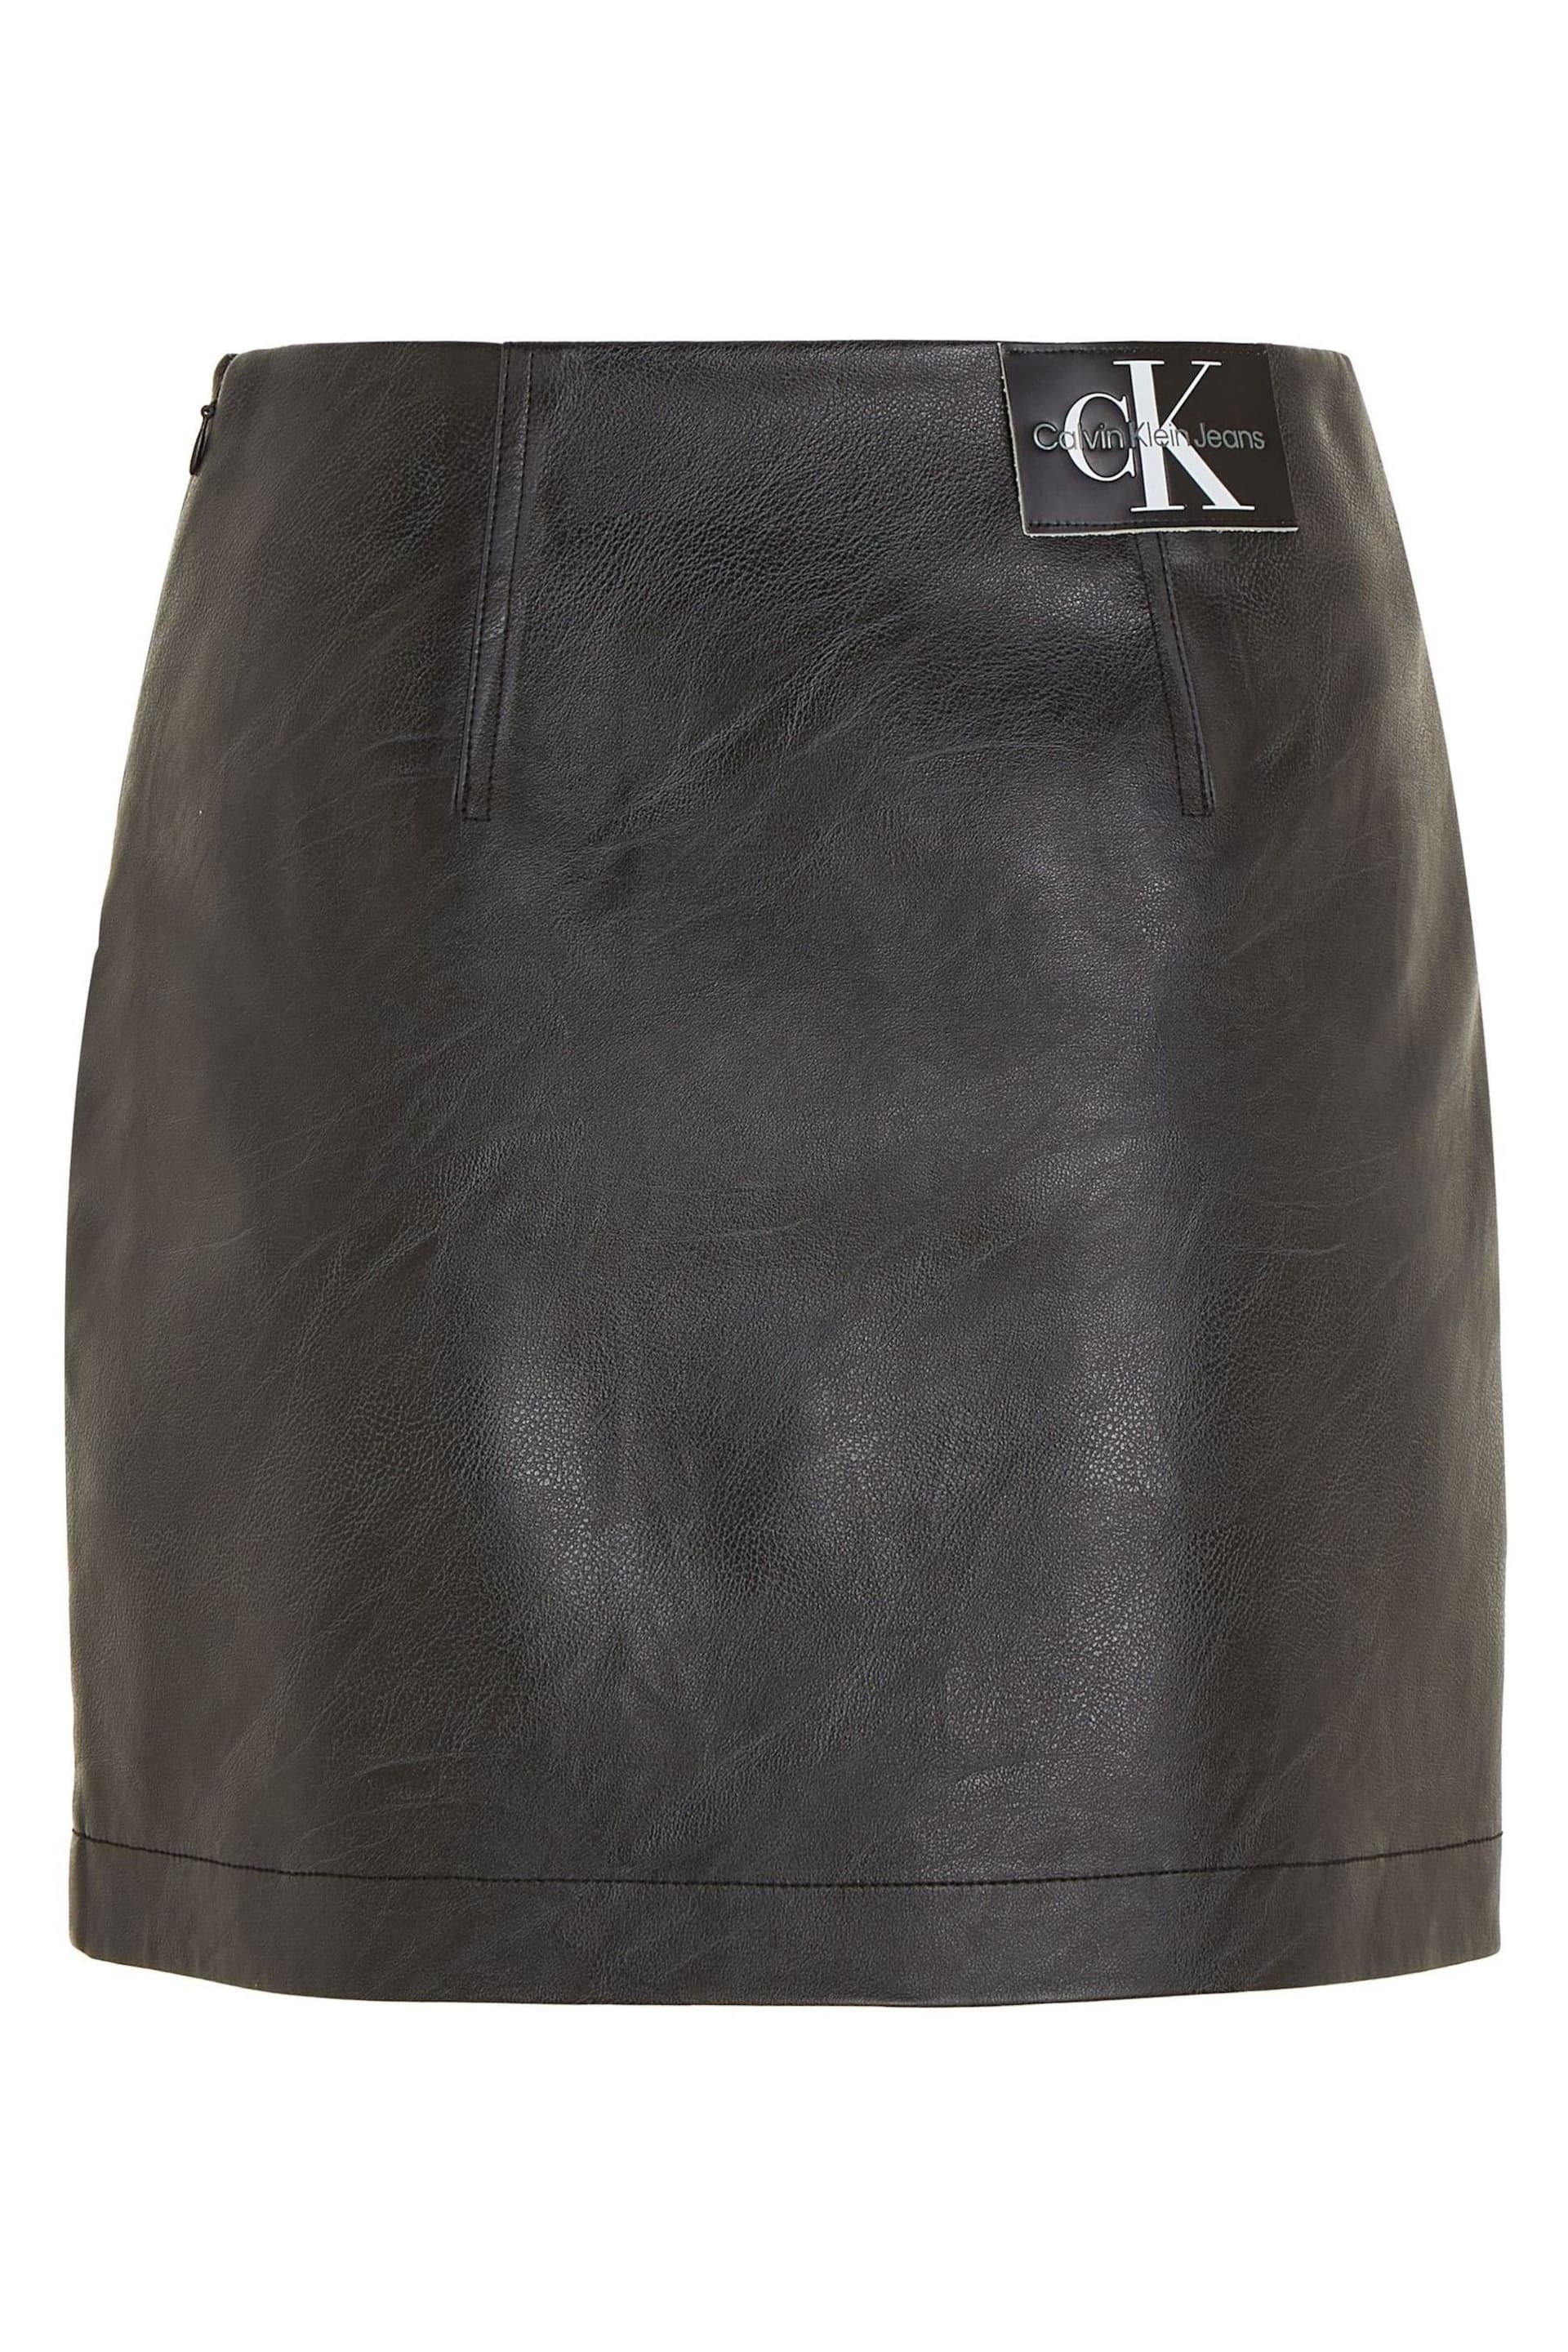 Calvin Klein Black Faux Fur Leather Skirt - Image 5 of 6